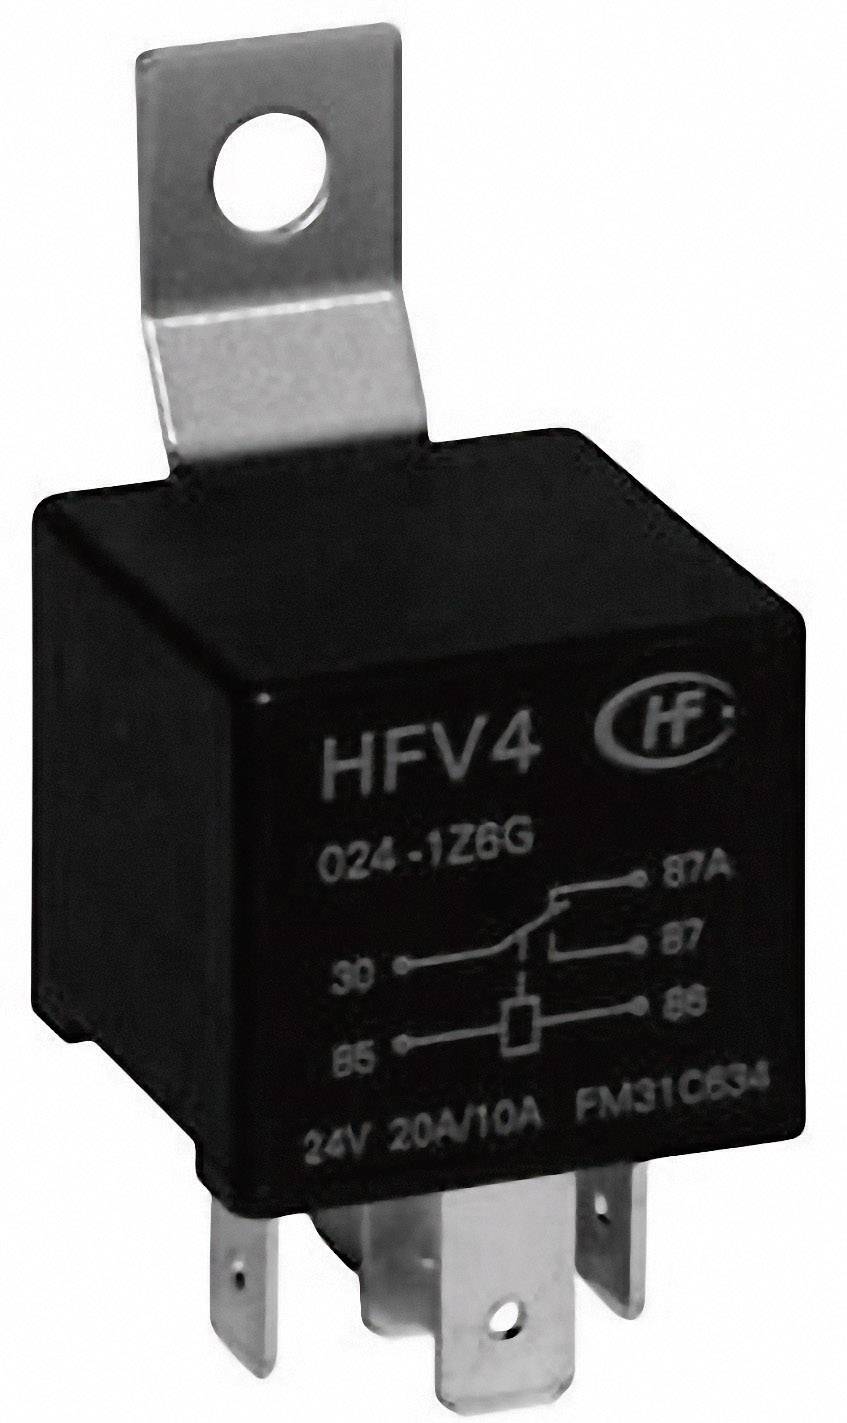 1PCS HFV4-012-1H1GR HF Relay 12VDC 40A 4Pins New